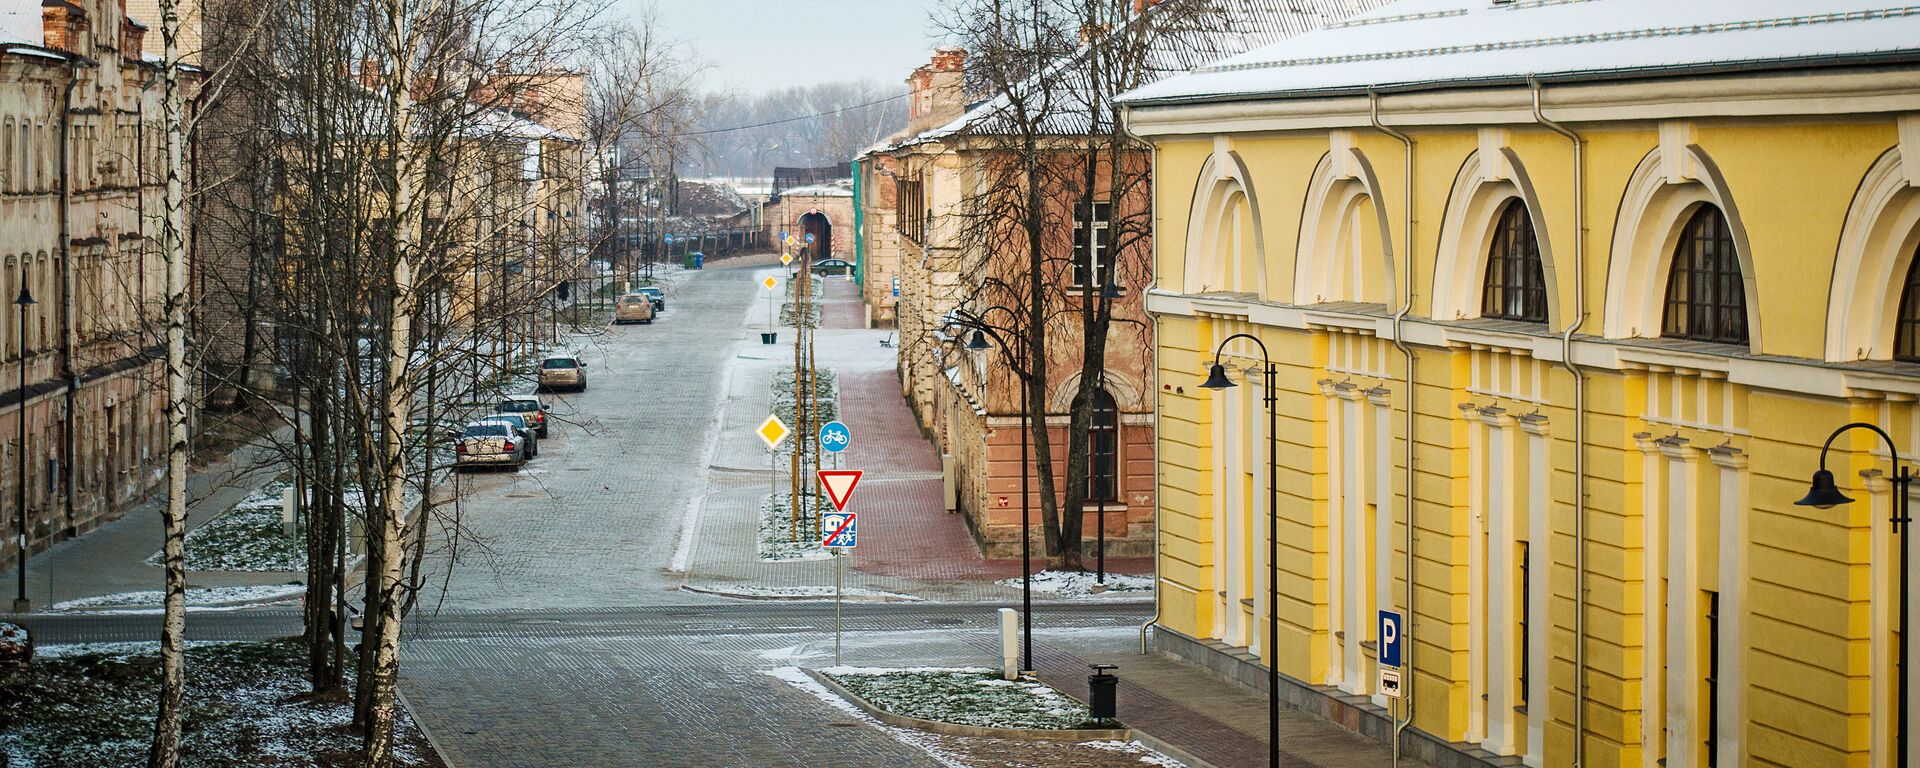 Улица в городе Даугавпилс, Латвия - Sputnik Латвия, 1920, 23.01.2019